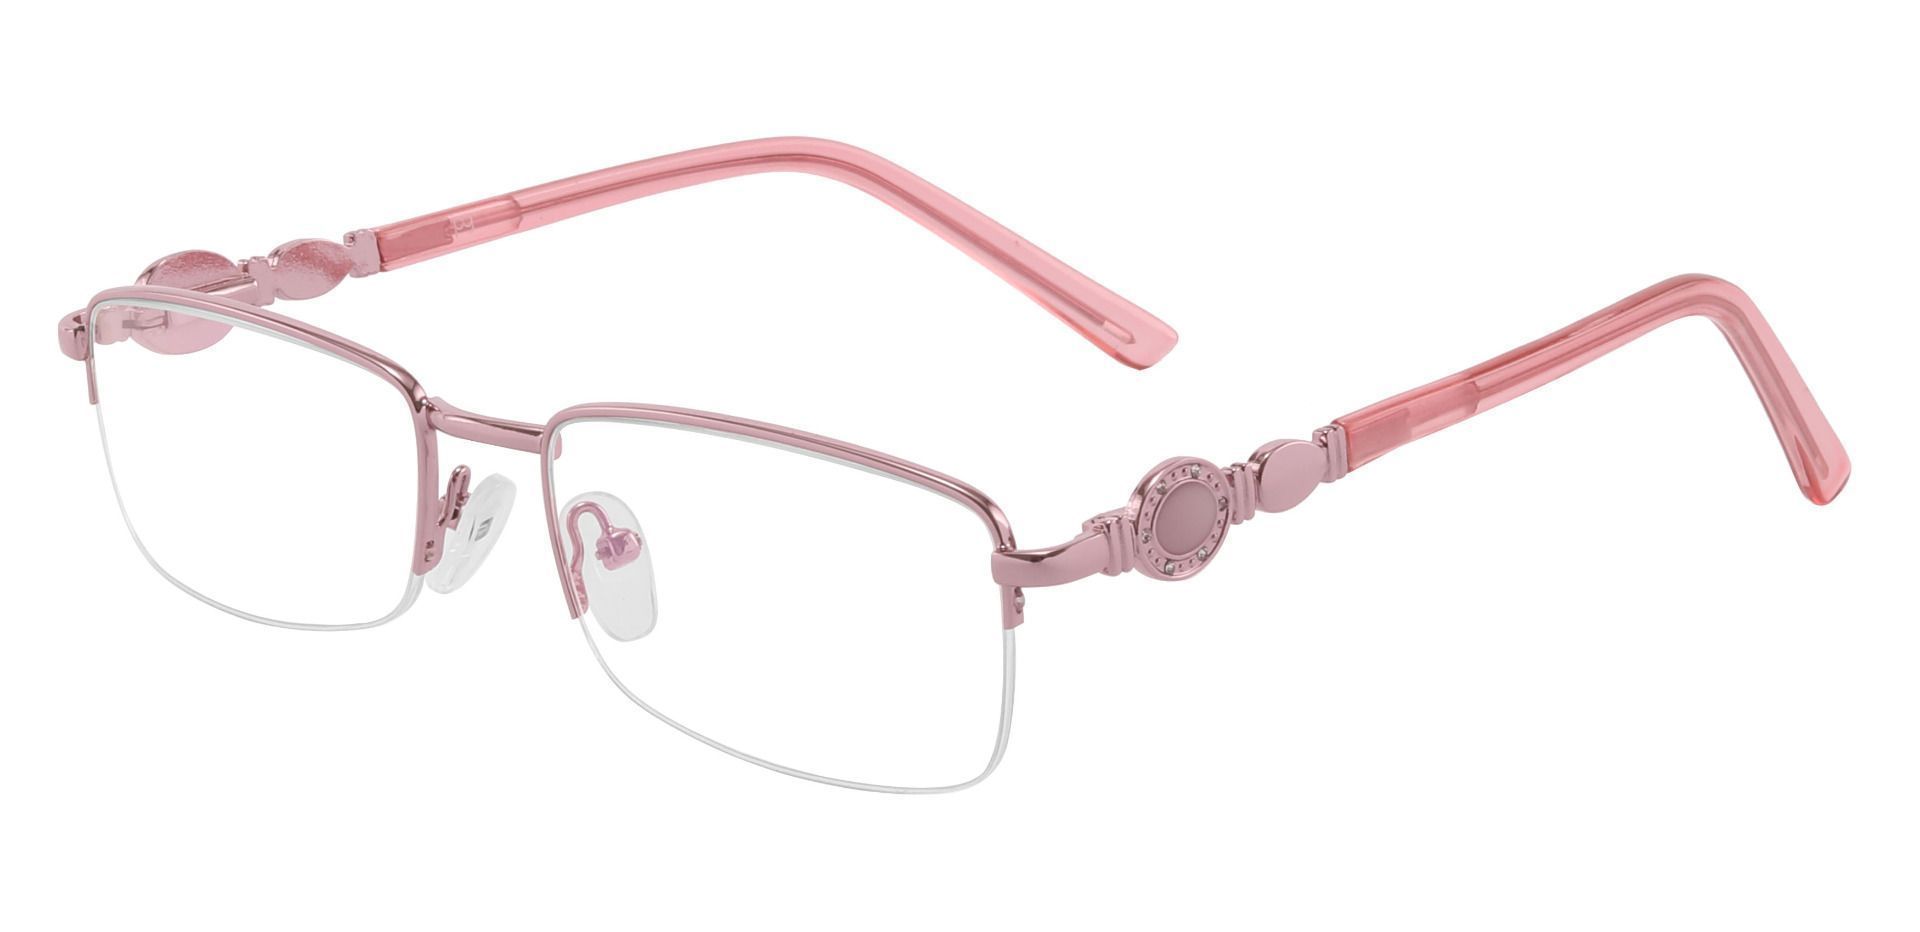 Crowley Rectangle Progressive Glasses - Pink